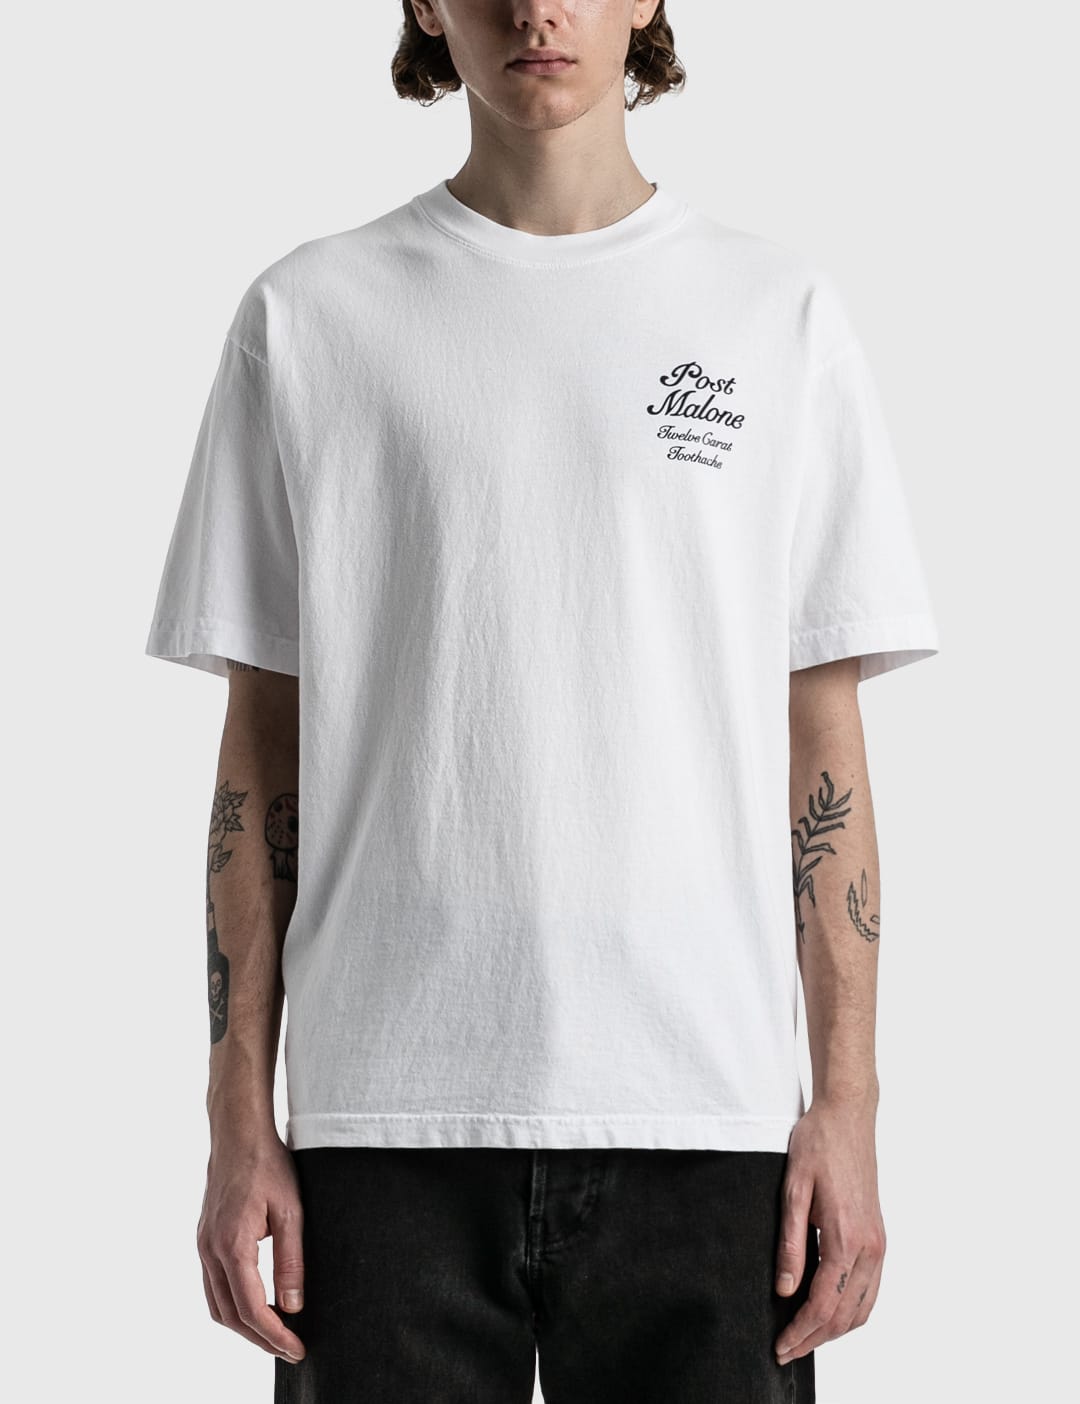 Post Malone x Verdy Tシャツ - メンズファッション